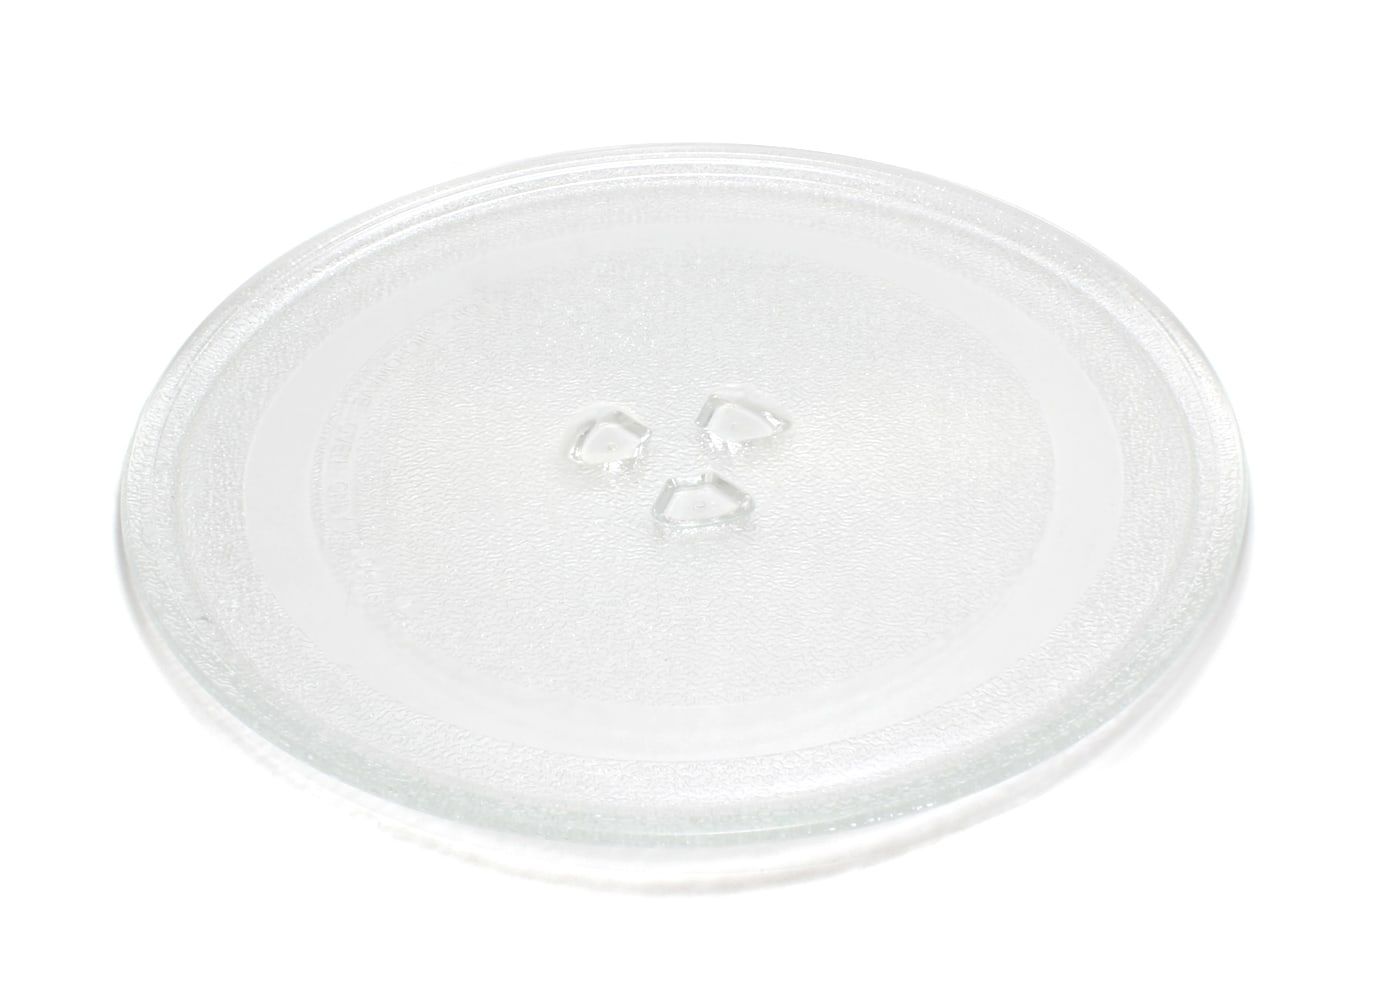 Тарелка для микроволновой печи Helpico 49PM005, MCW011UN тарелка для микроволновой печи 324 мм с креплениями под коплер